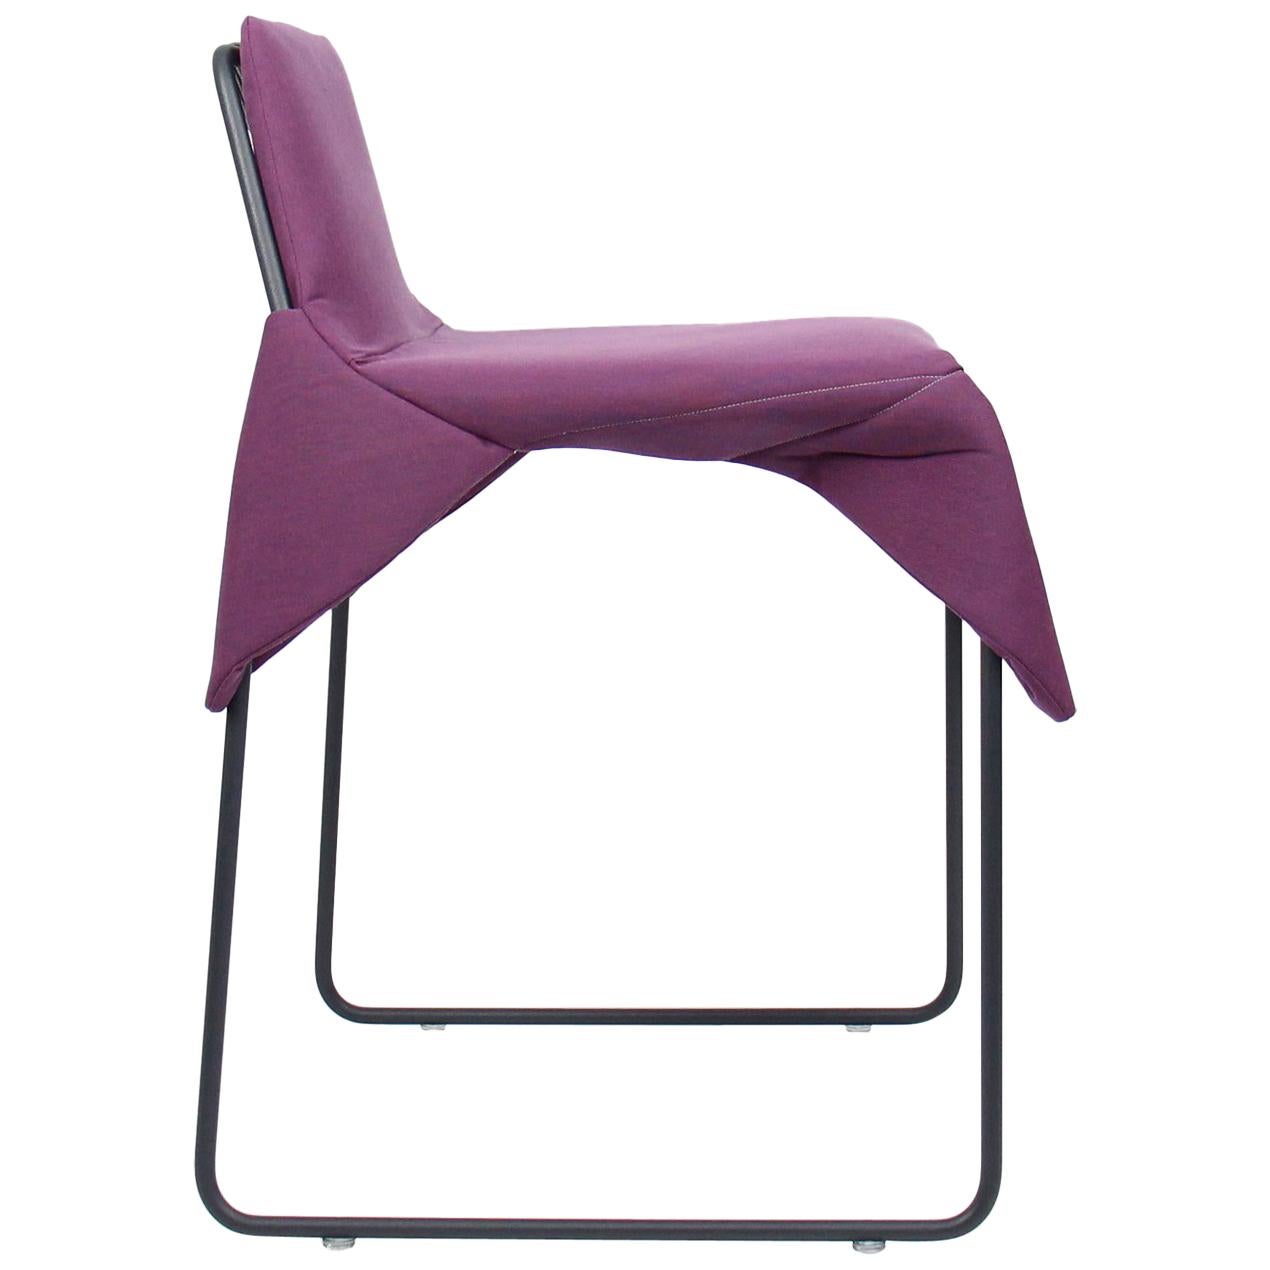 Merkled Net Wrap Chair For Sale